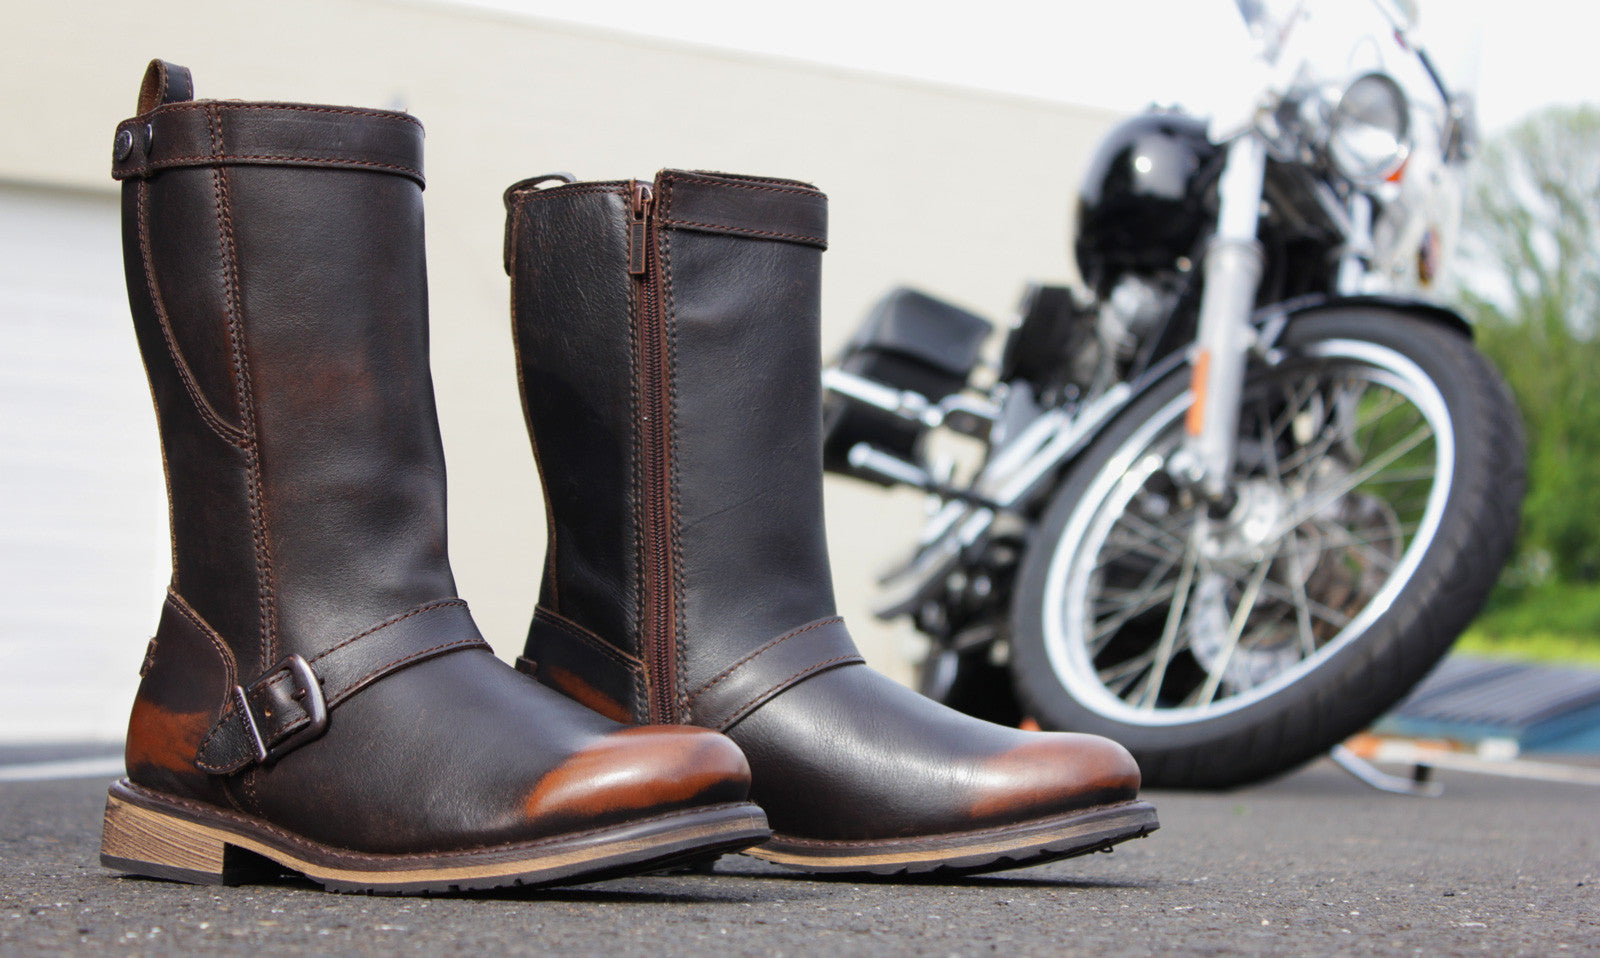 Review: Harley Davidson Vincent Men's Motorcycle Boots